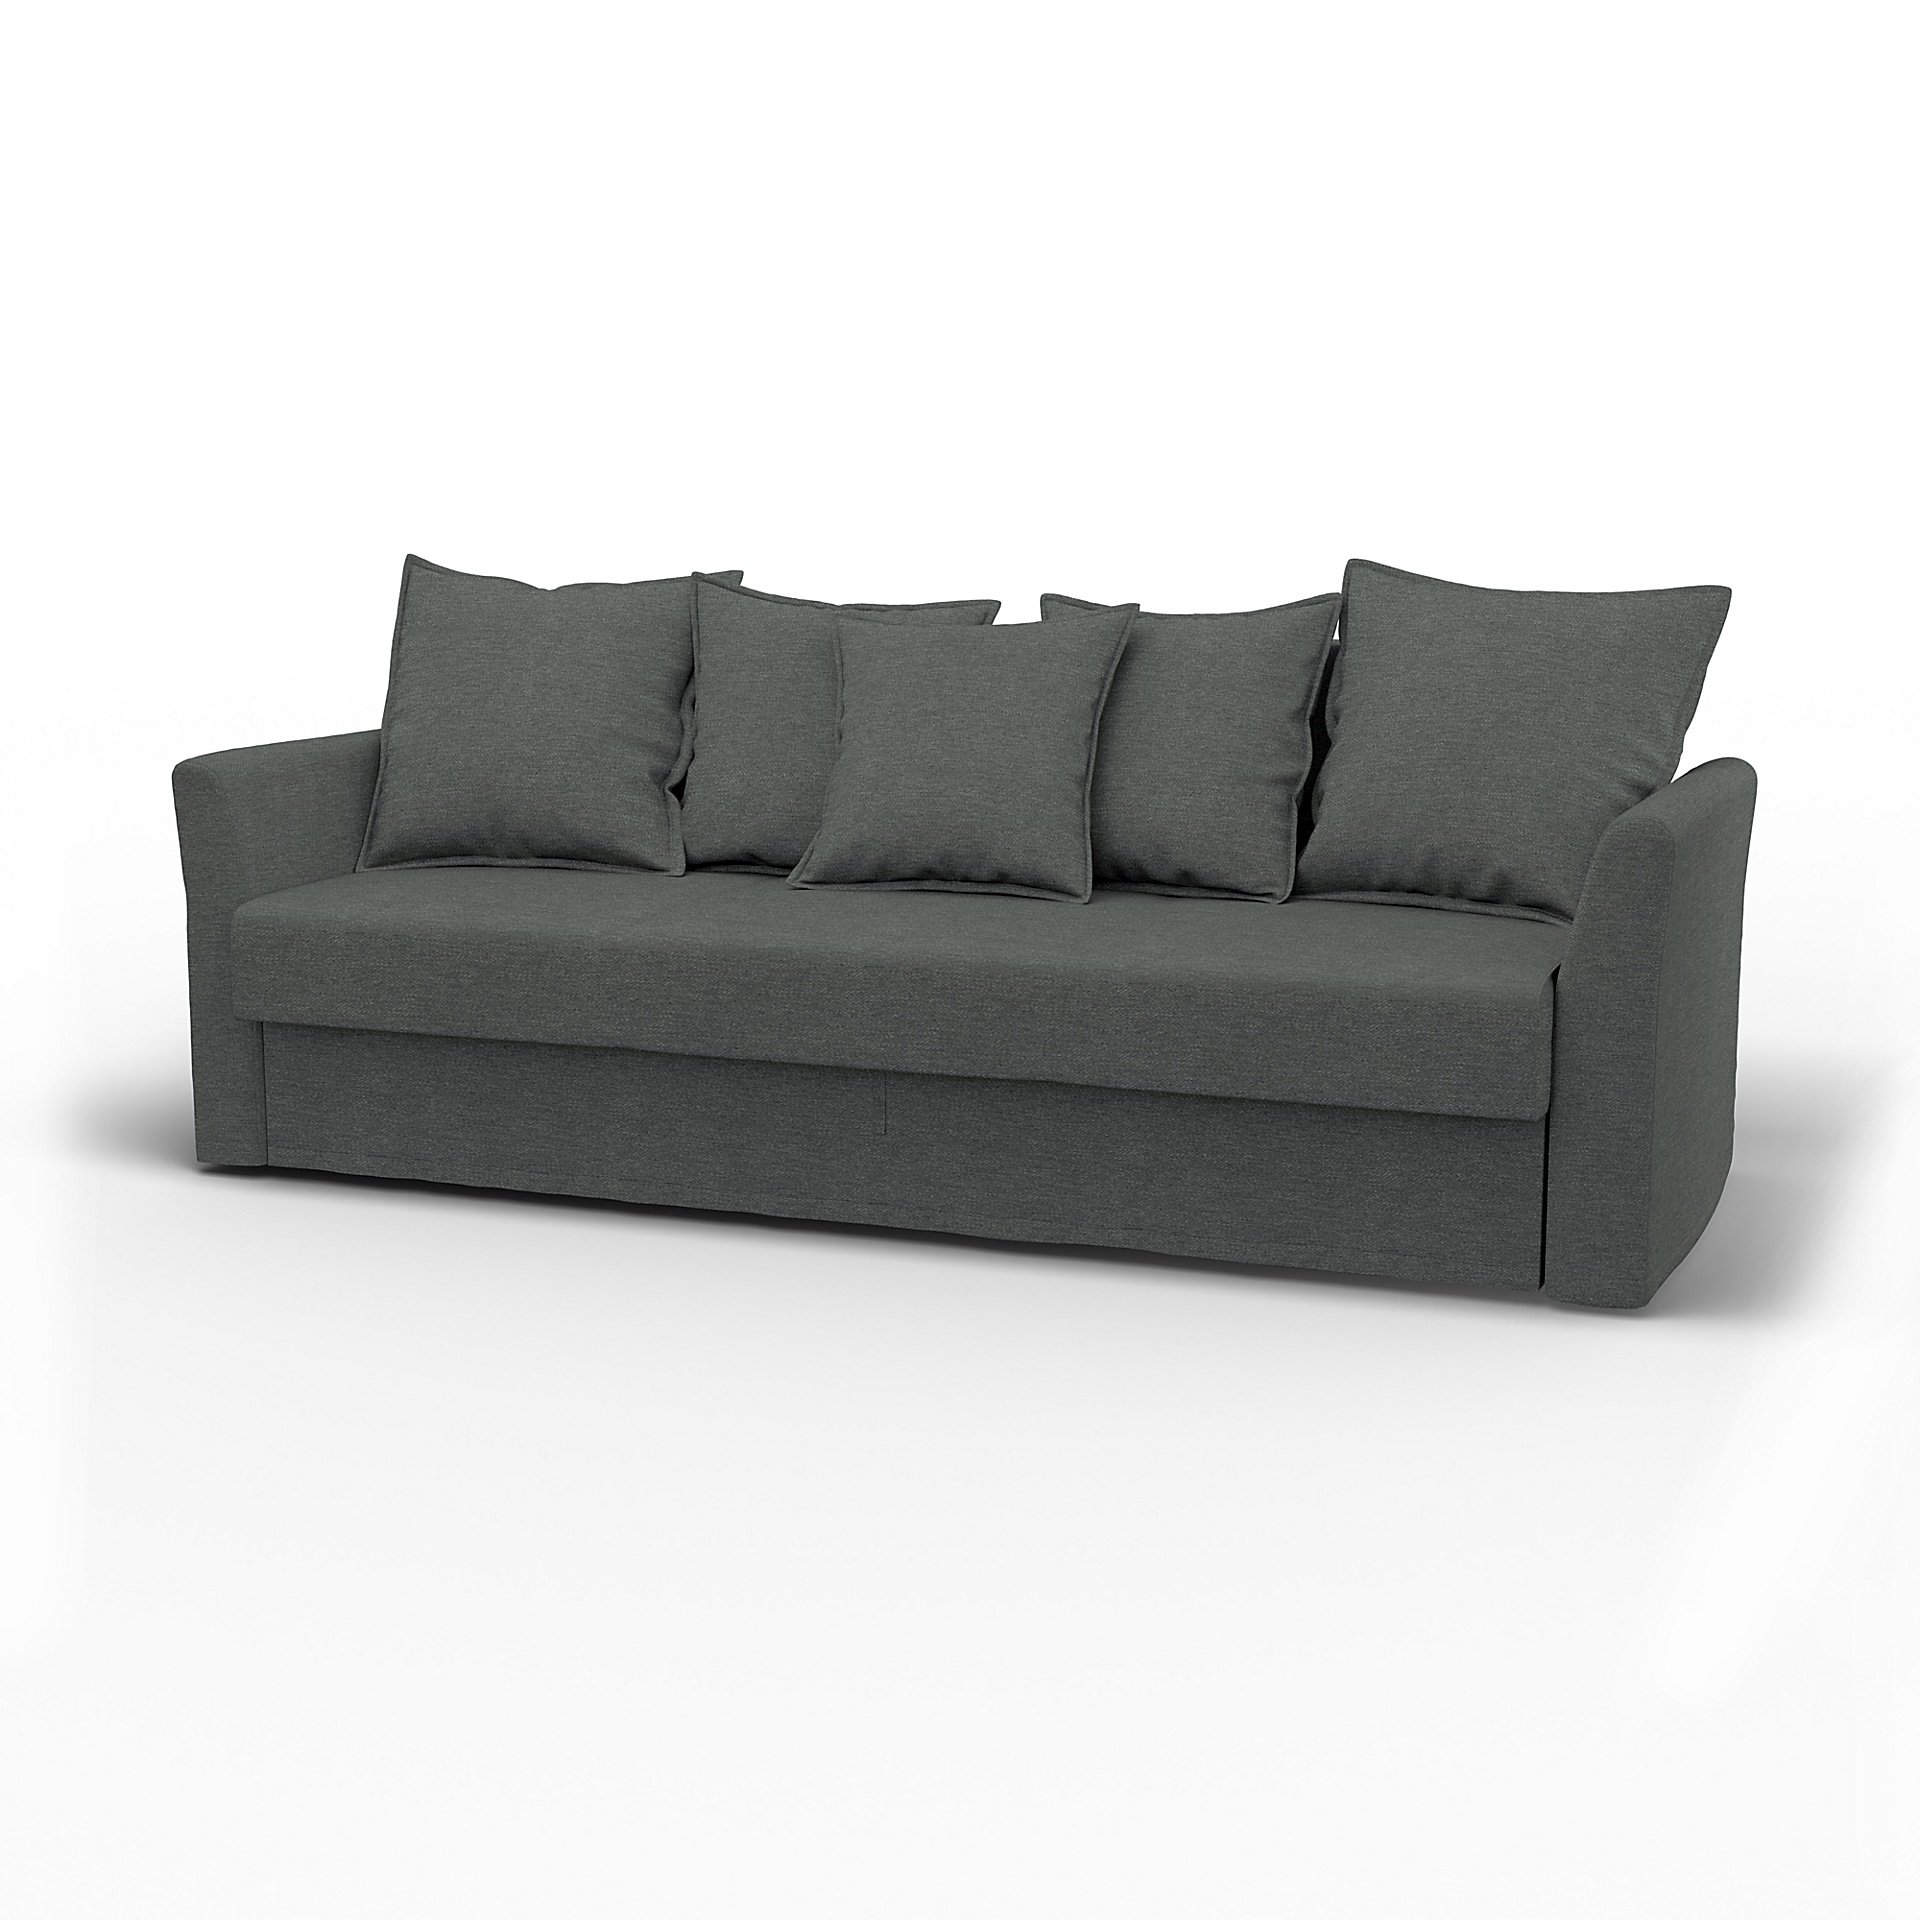 IKEA - Holmsund Sofabed, Laurel, Boucle & Texture - Bemz